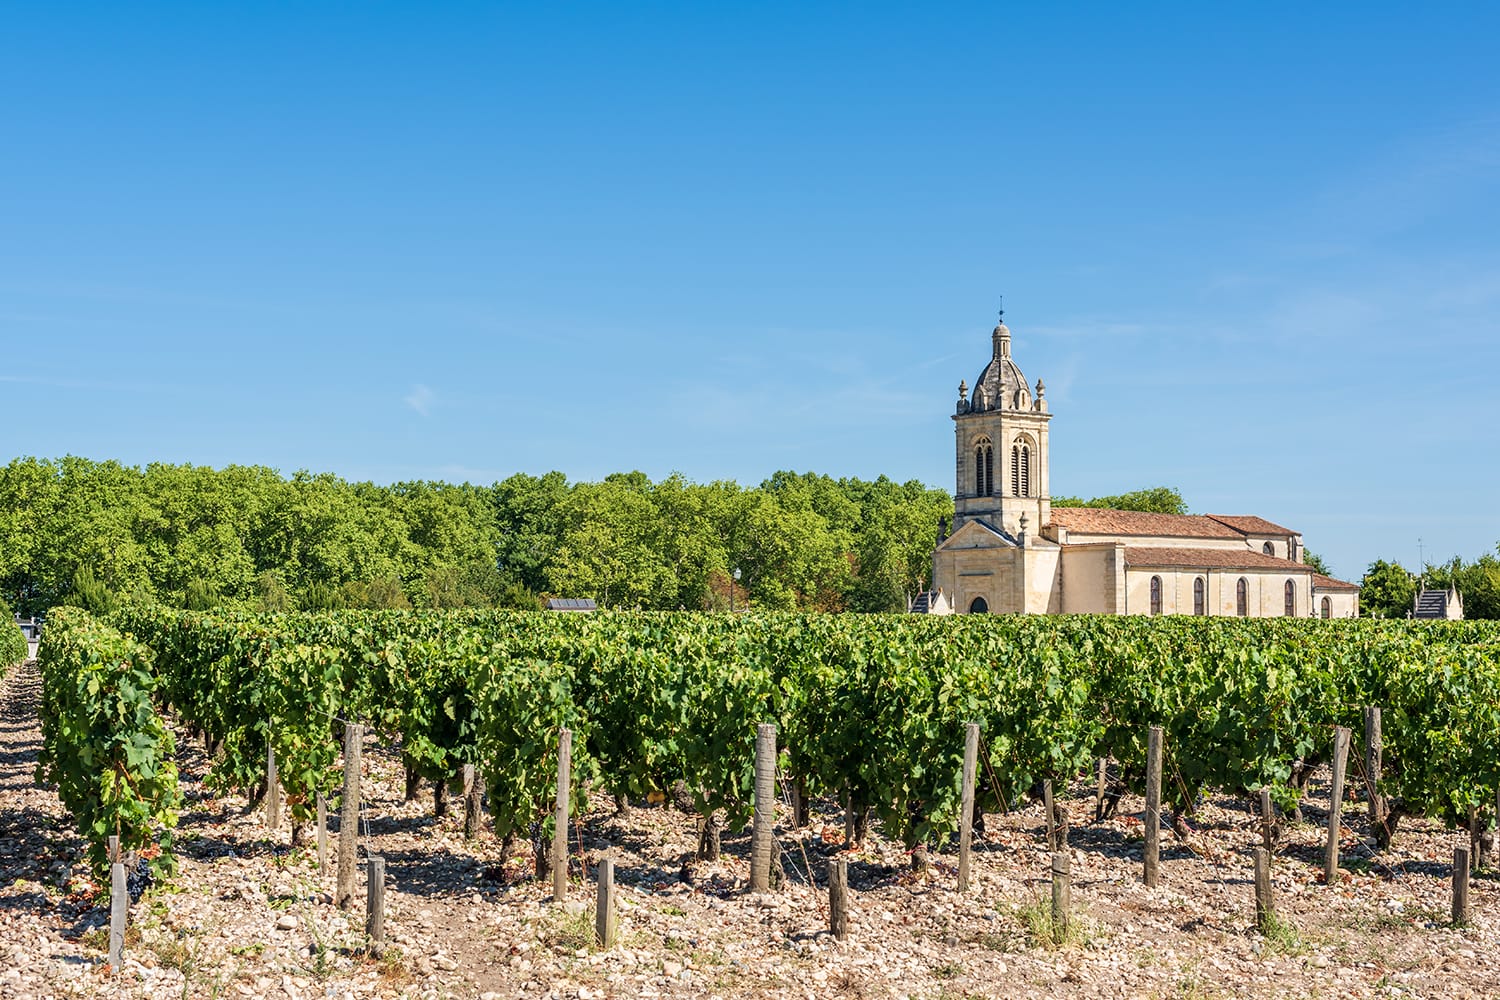 Vineyard in Medoc (France), a famous wine-producing region near Bordeaux